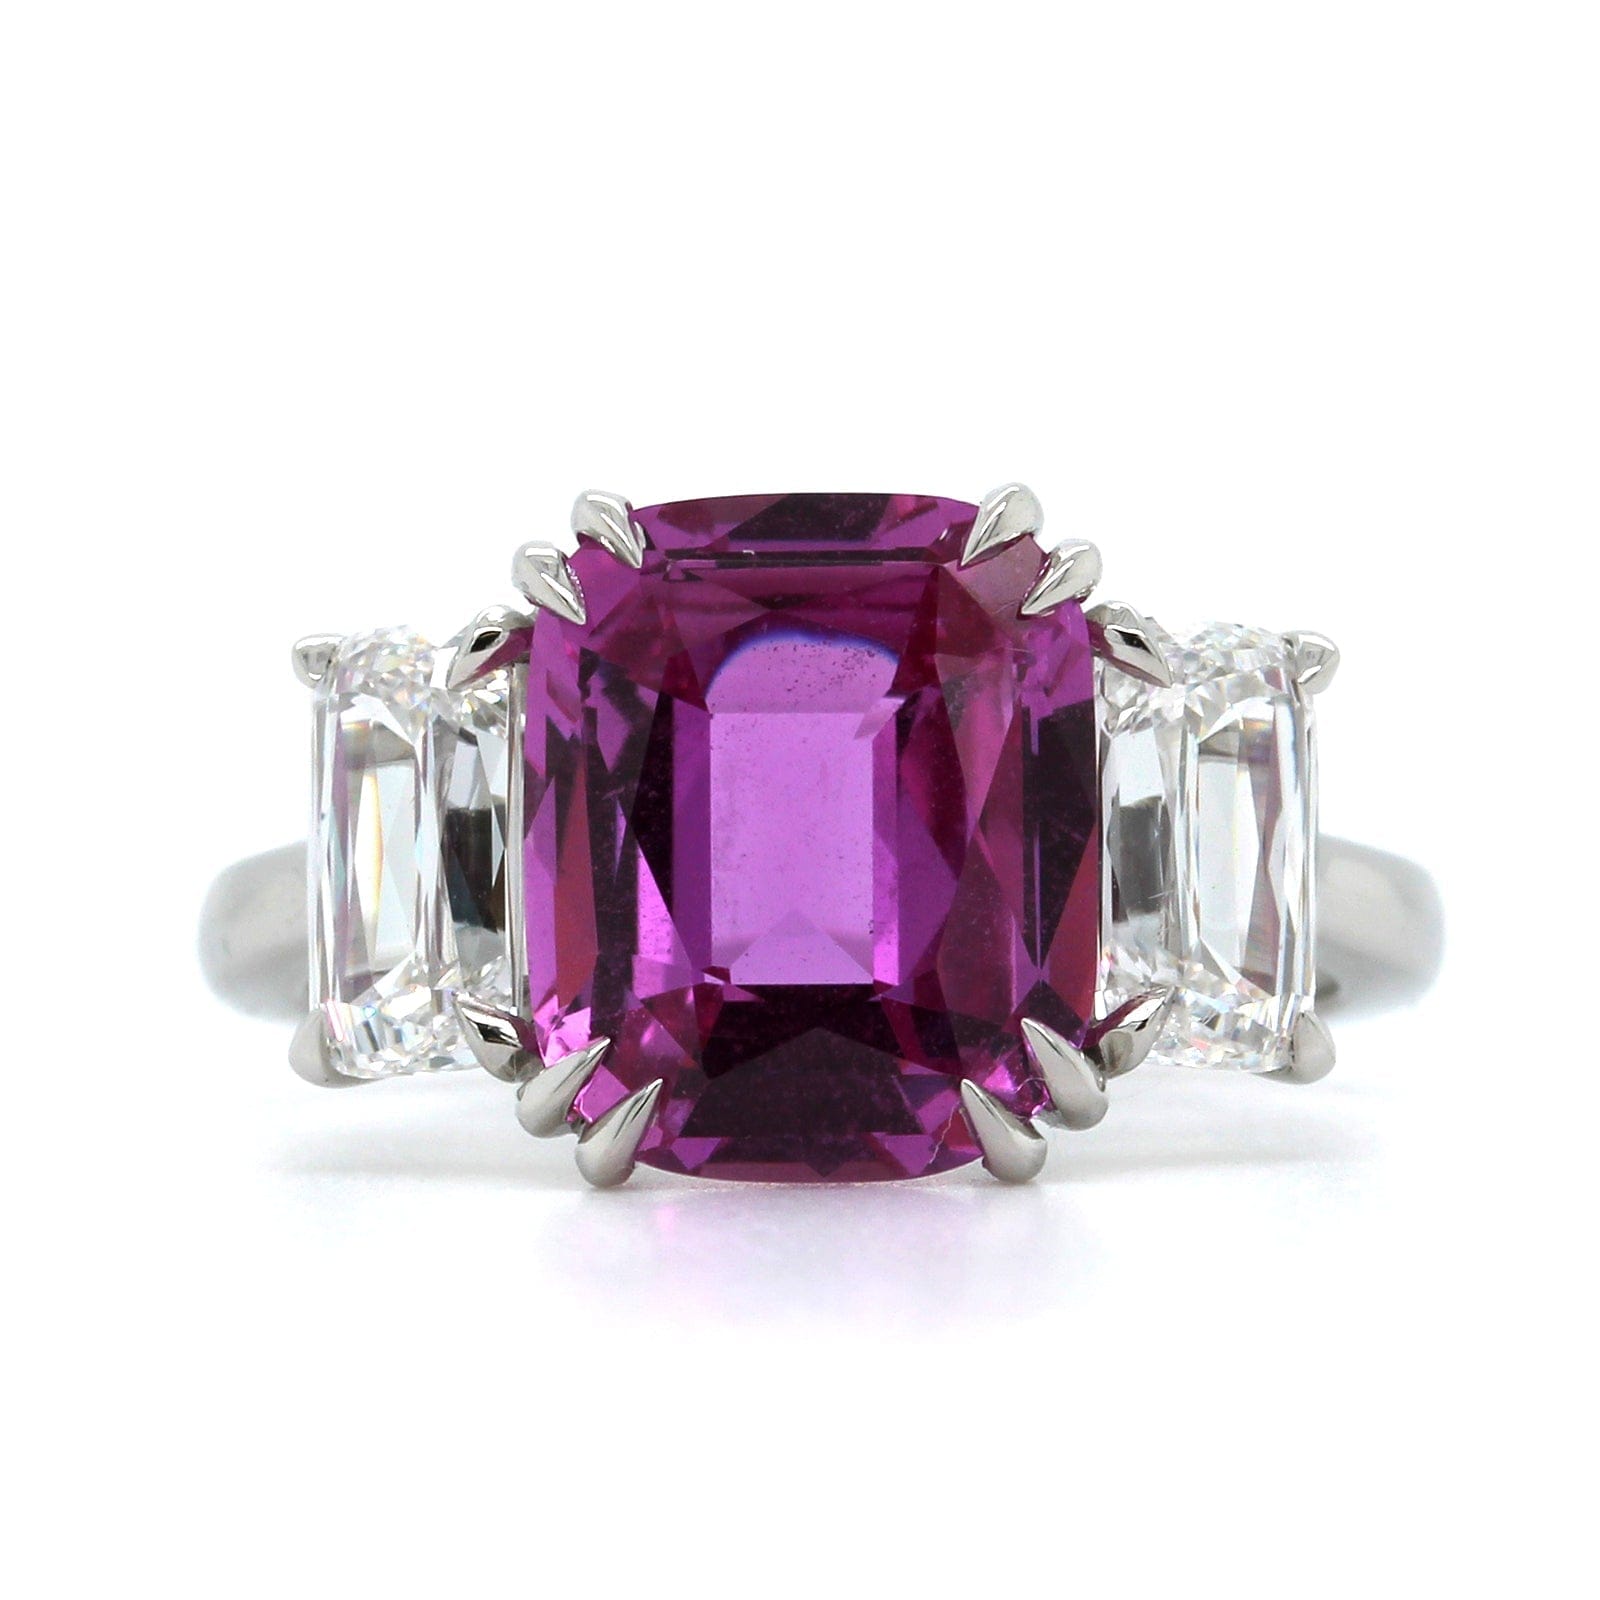 Platinum Pink Sapphire 3 Stone Ring